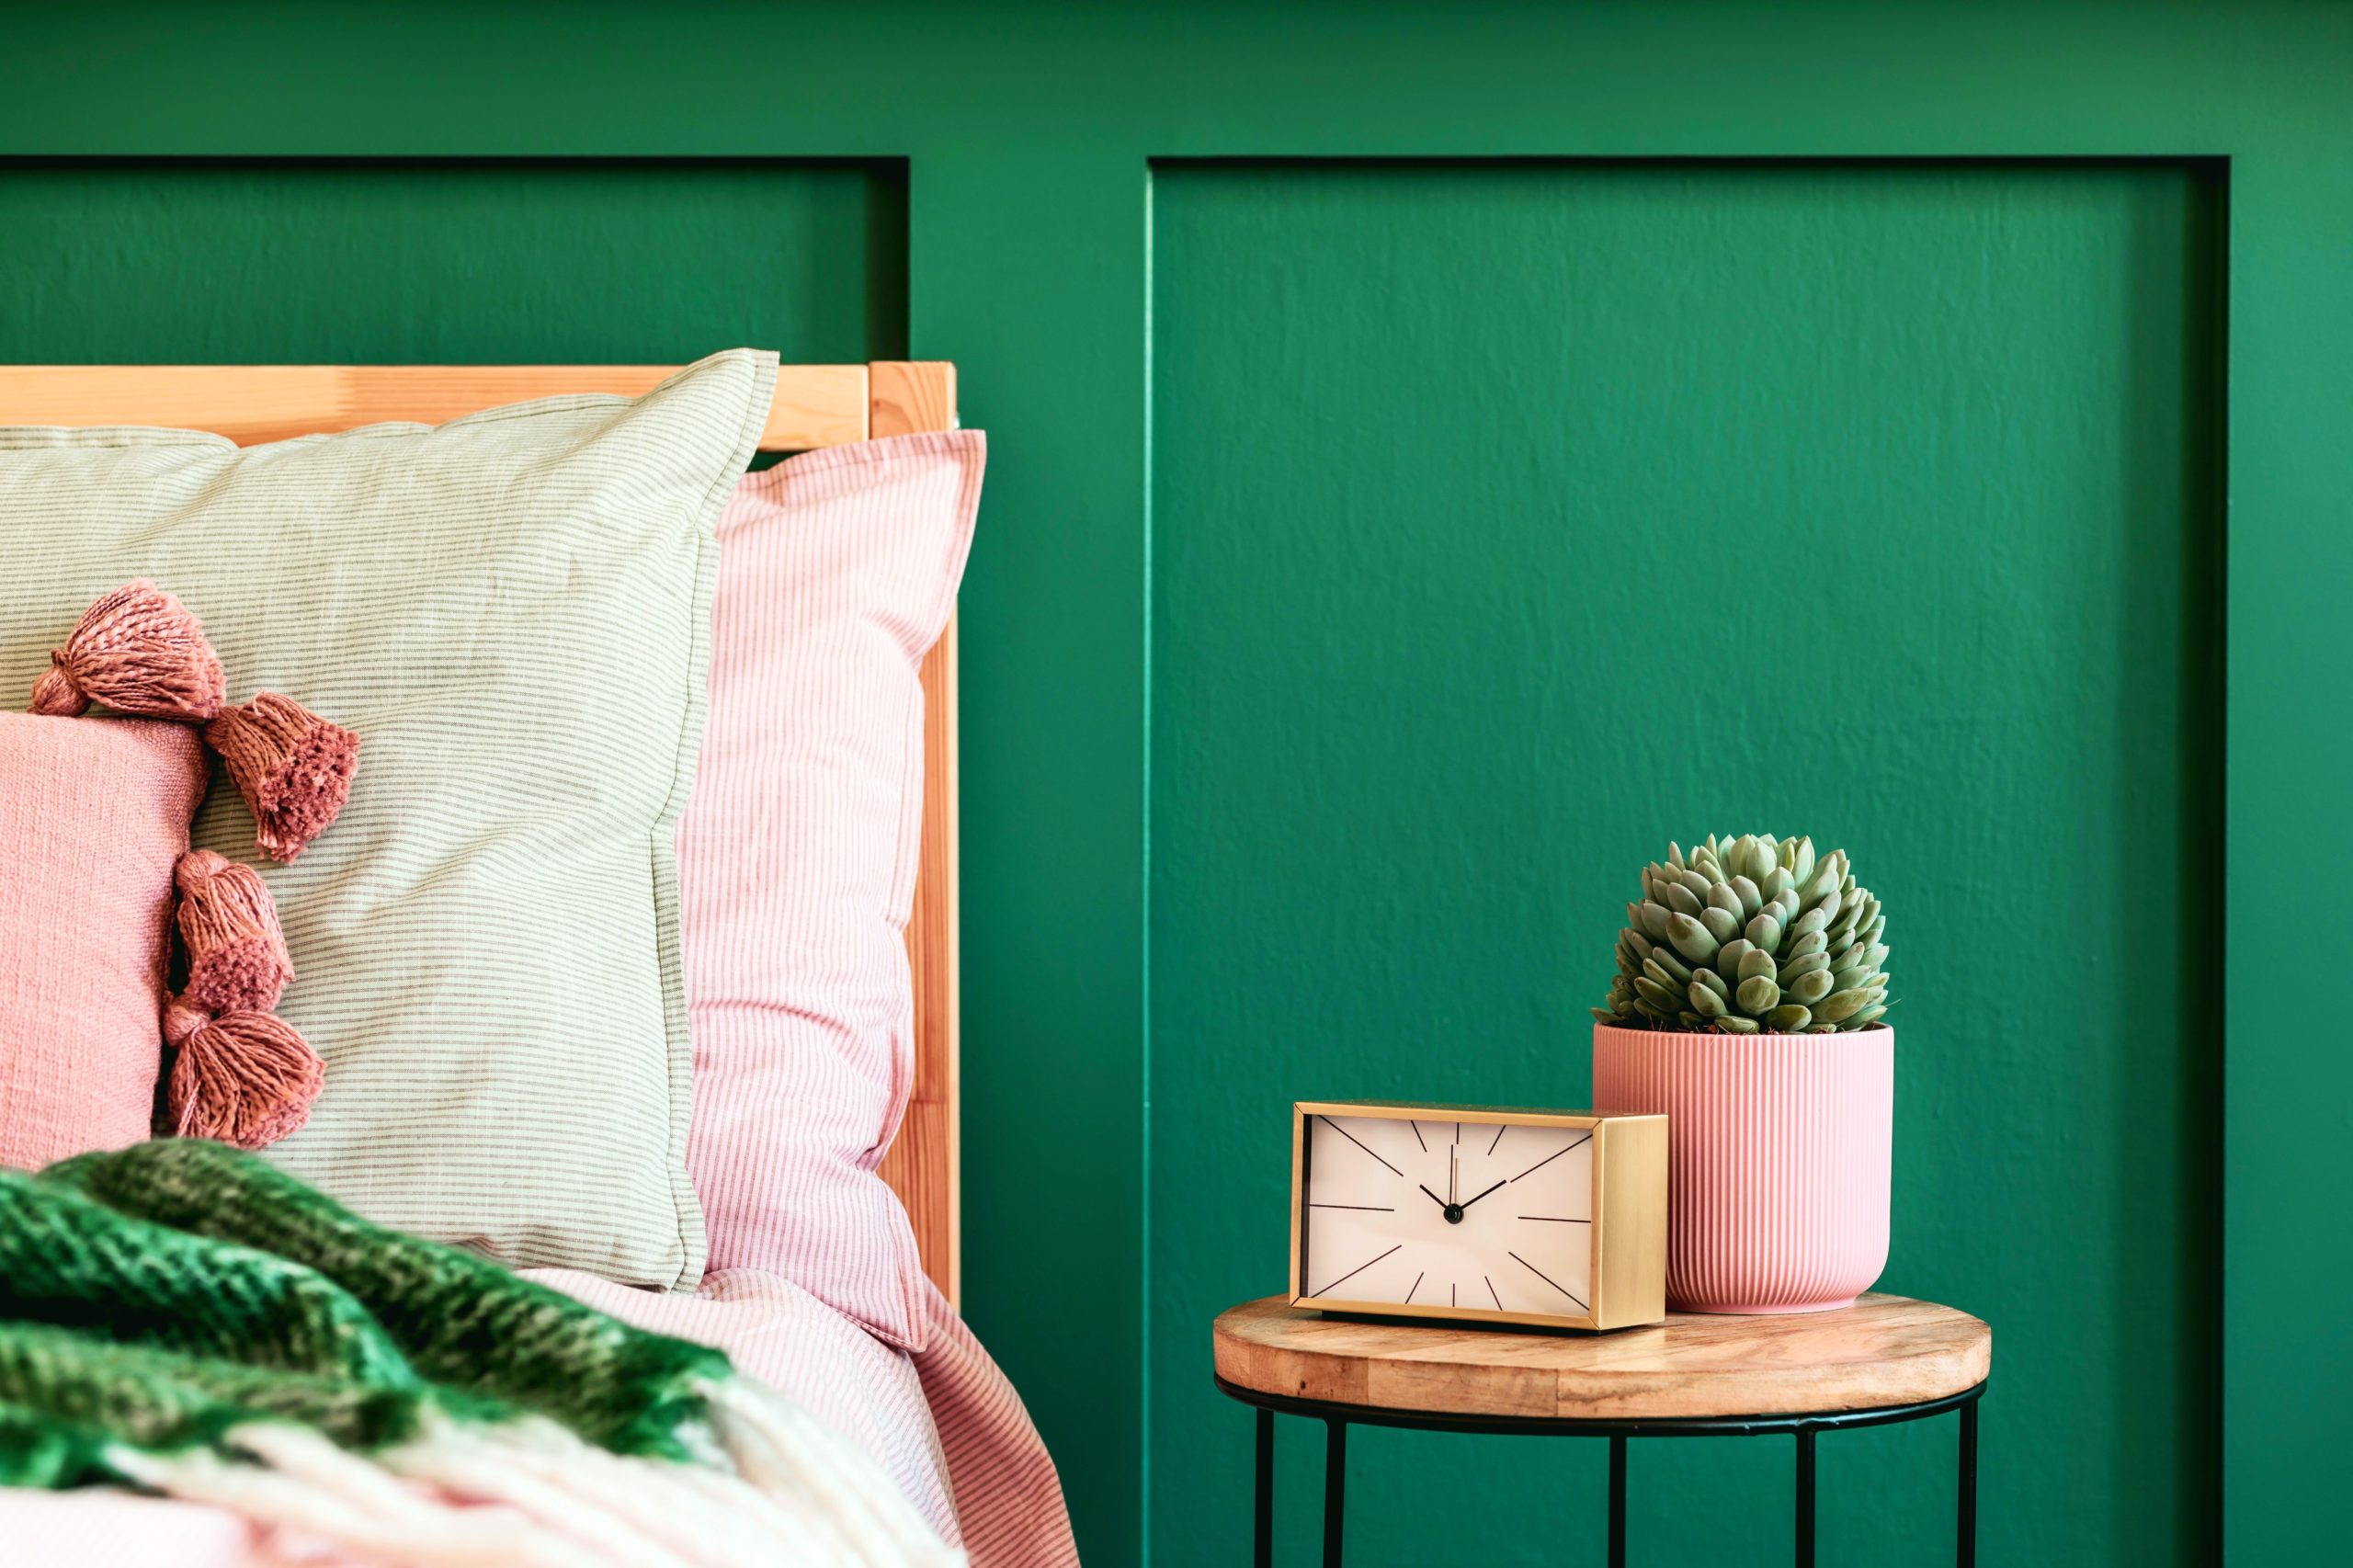 <img src="green.jpg" alt="green bedroom with succulents"/> 